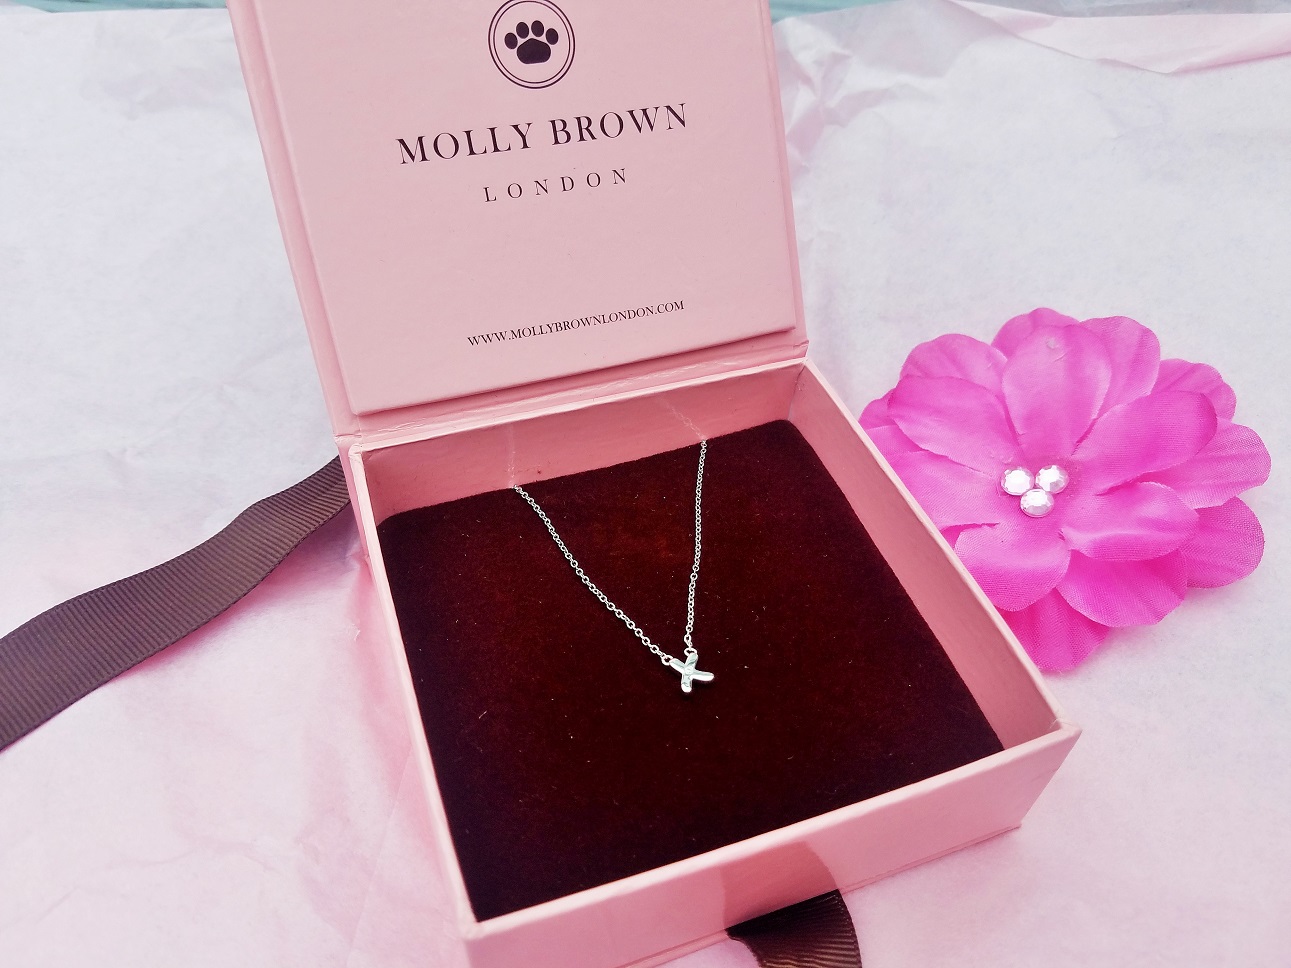 Molly Brown Diamond Necklace with kiss pendant keepsake